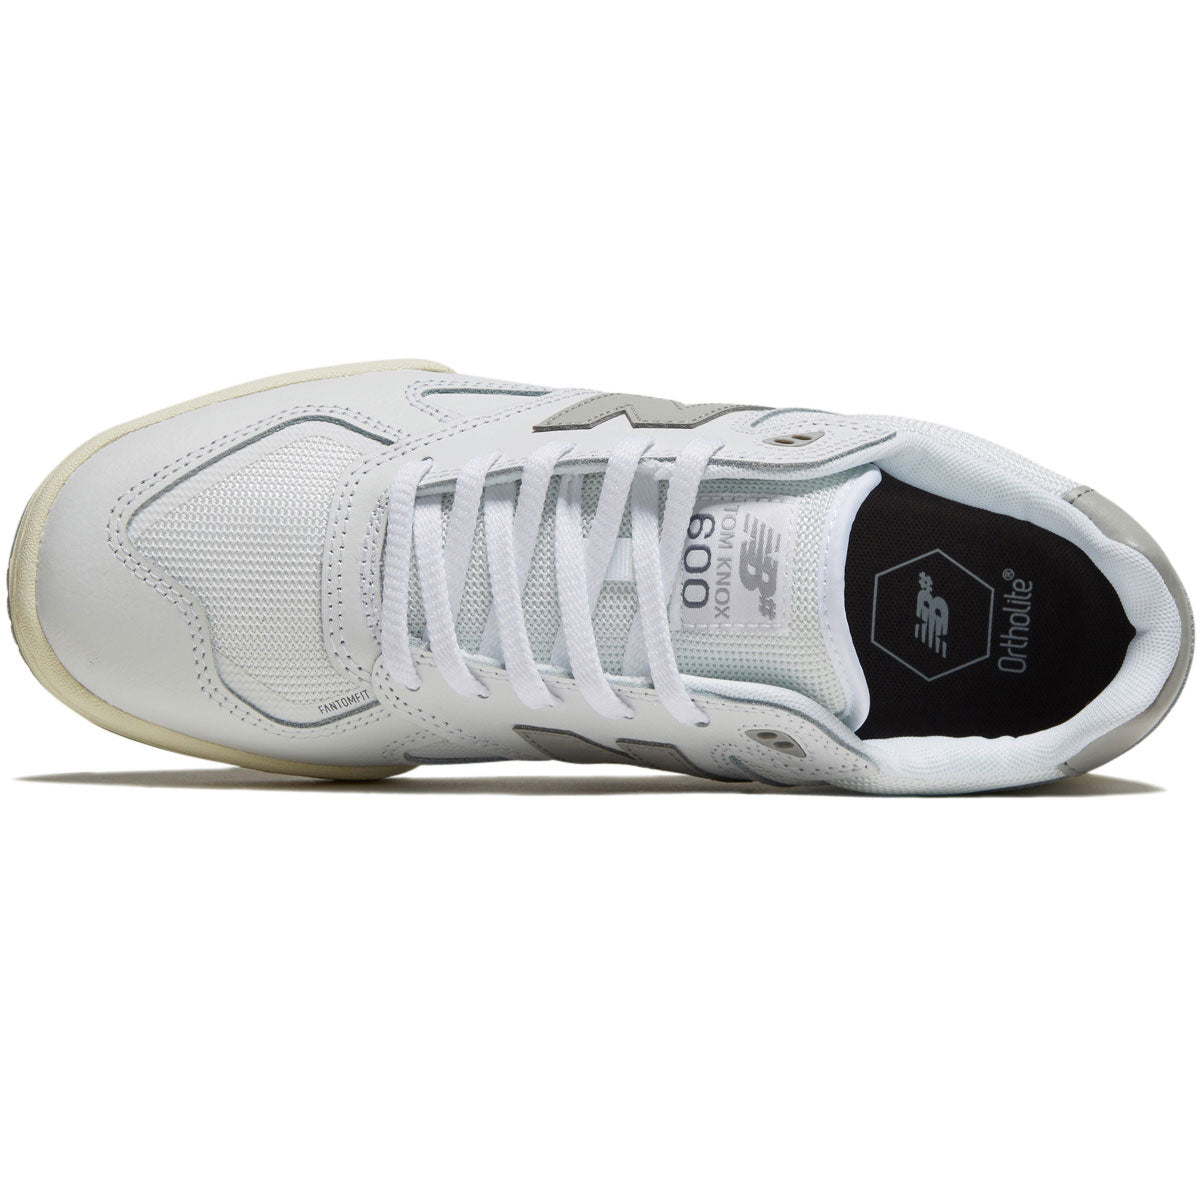 New Balance 600 Tom Knox Shoes - White image 3